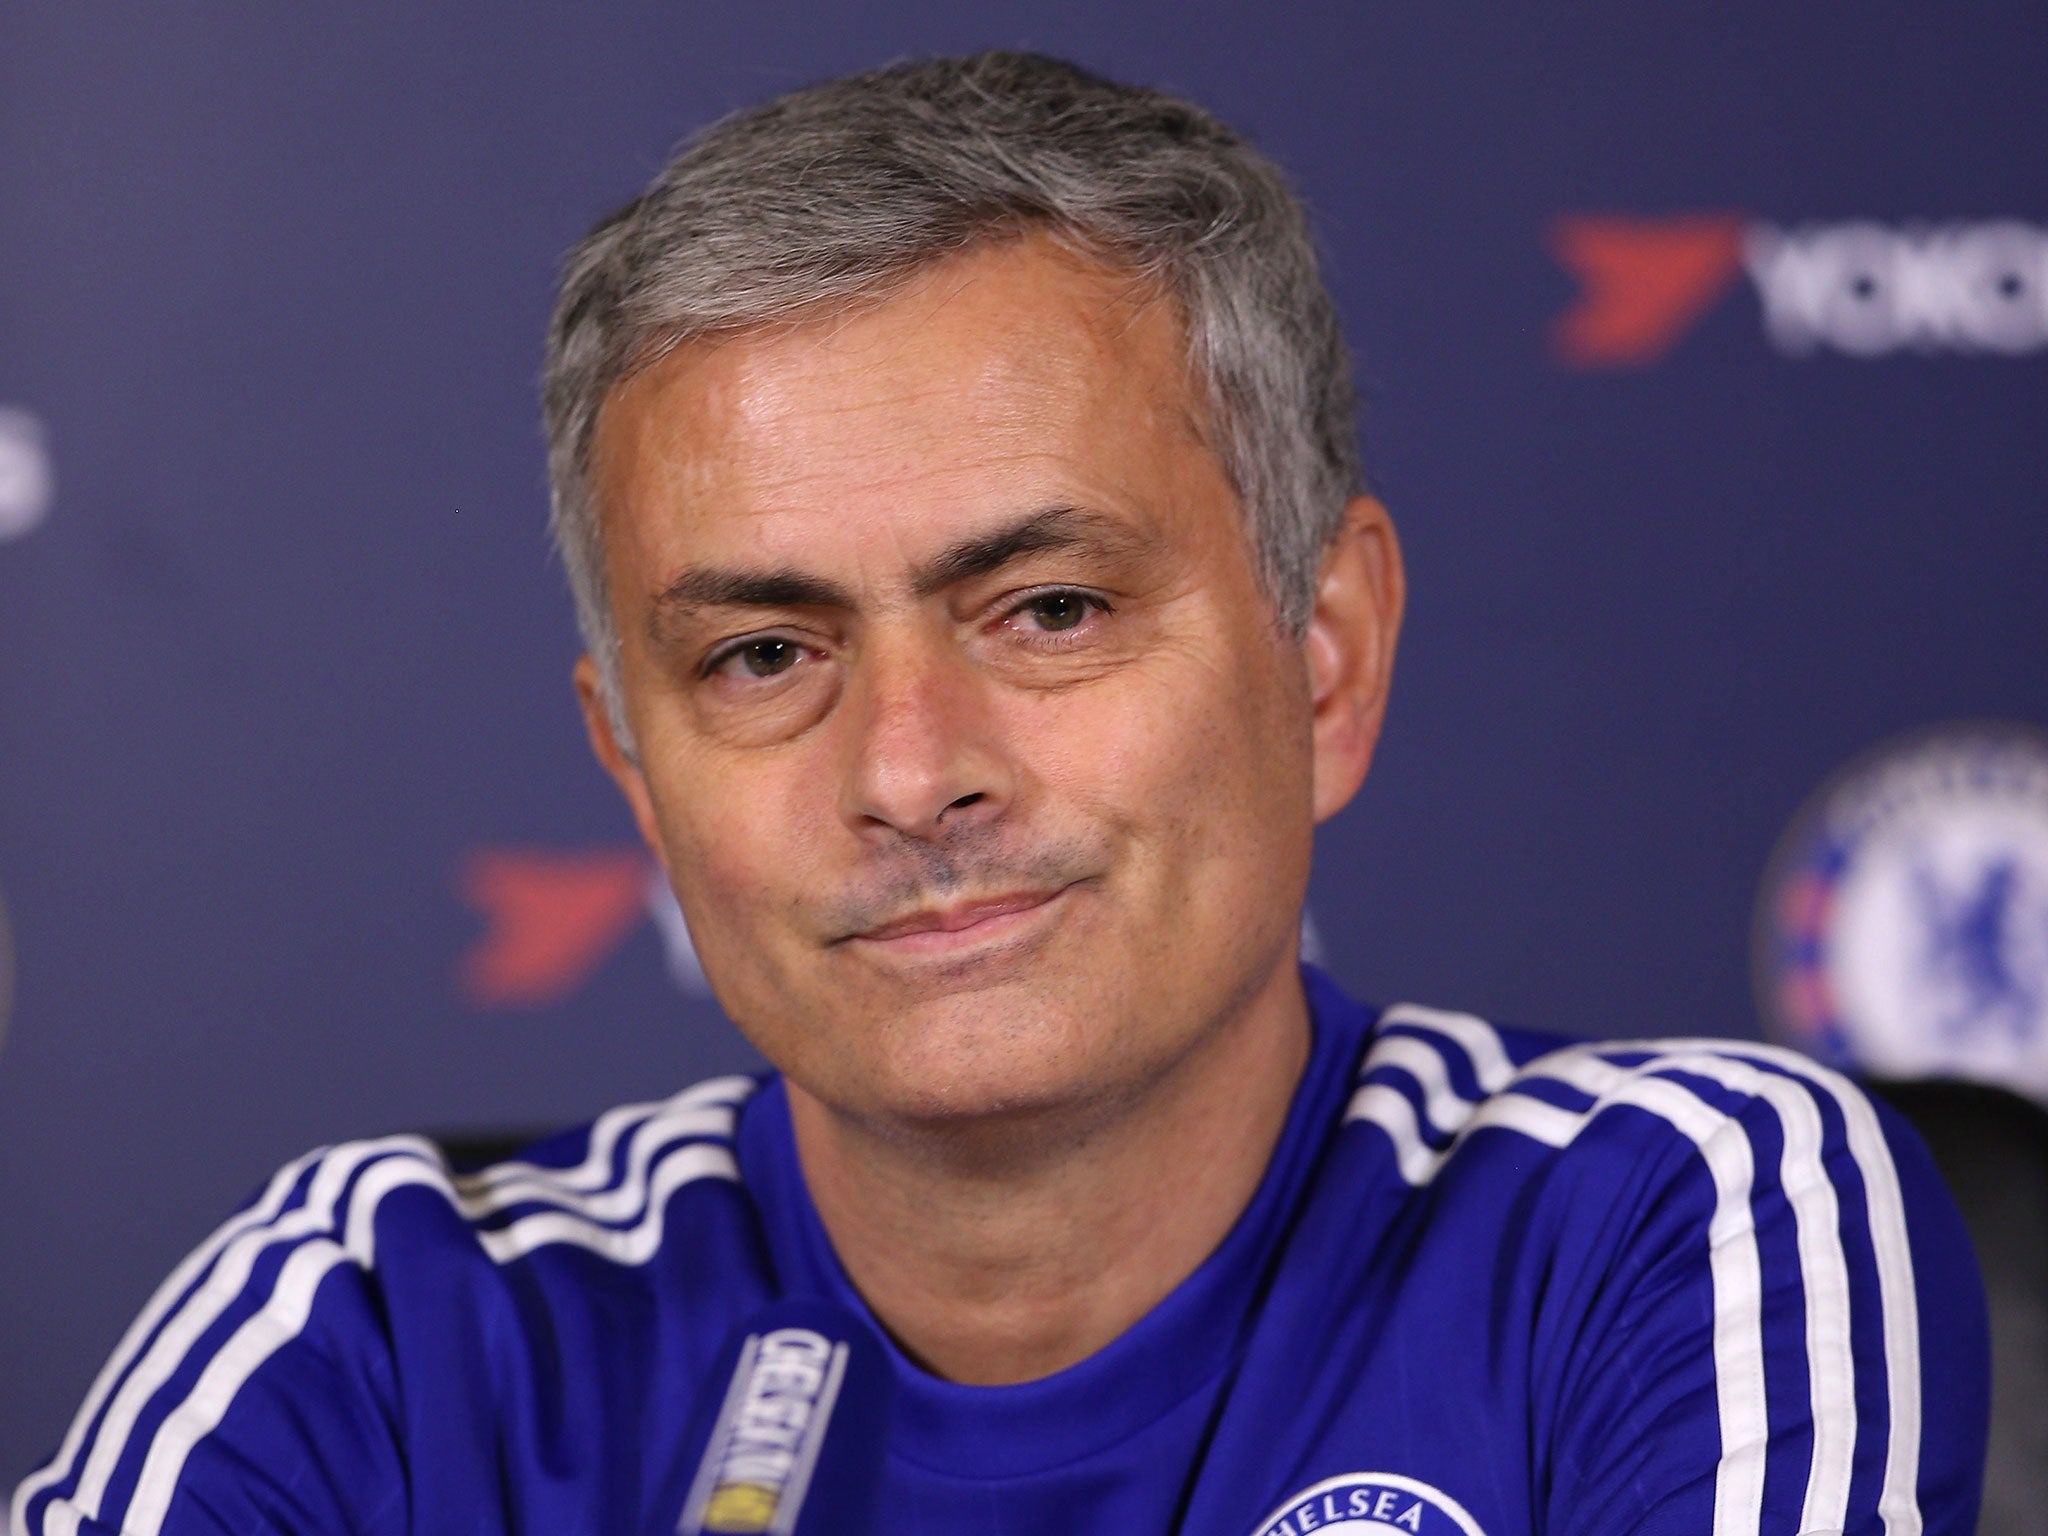 The former Chelsea manager Jose Mourinho